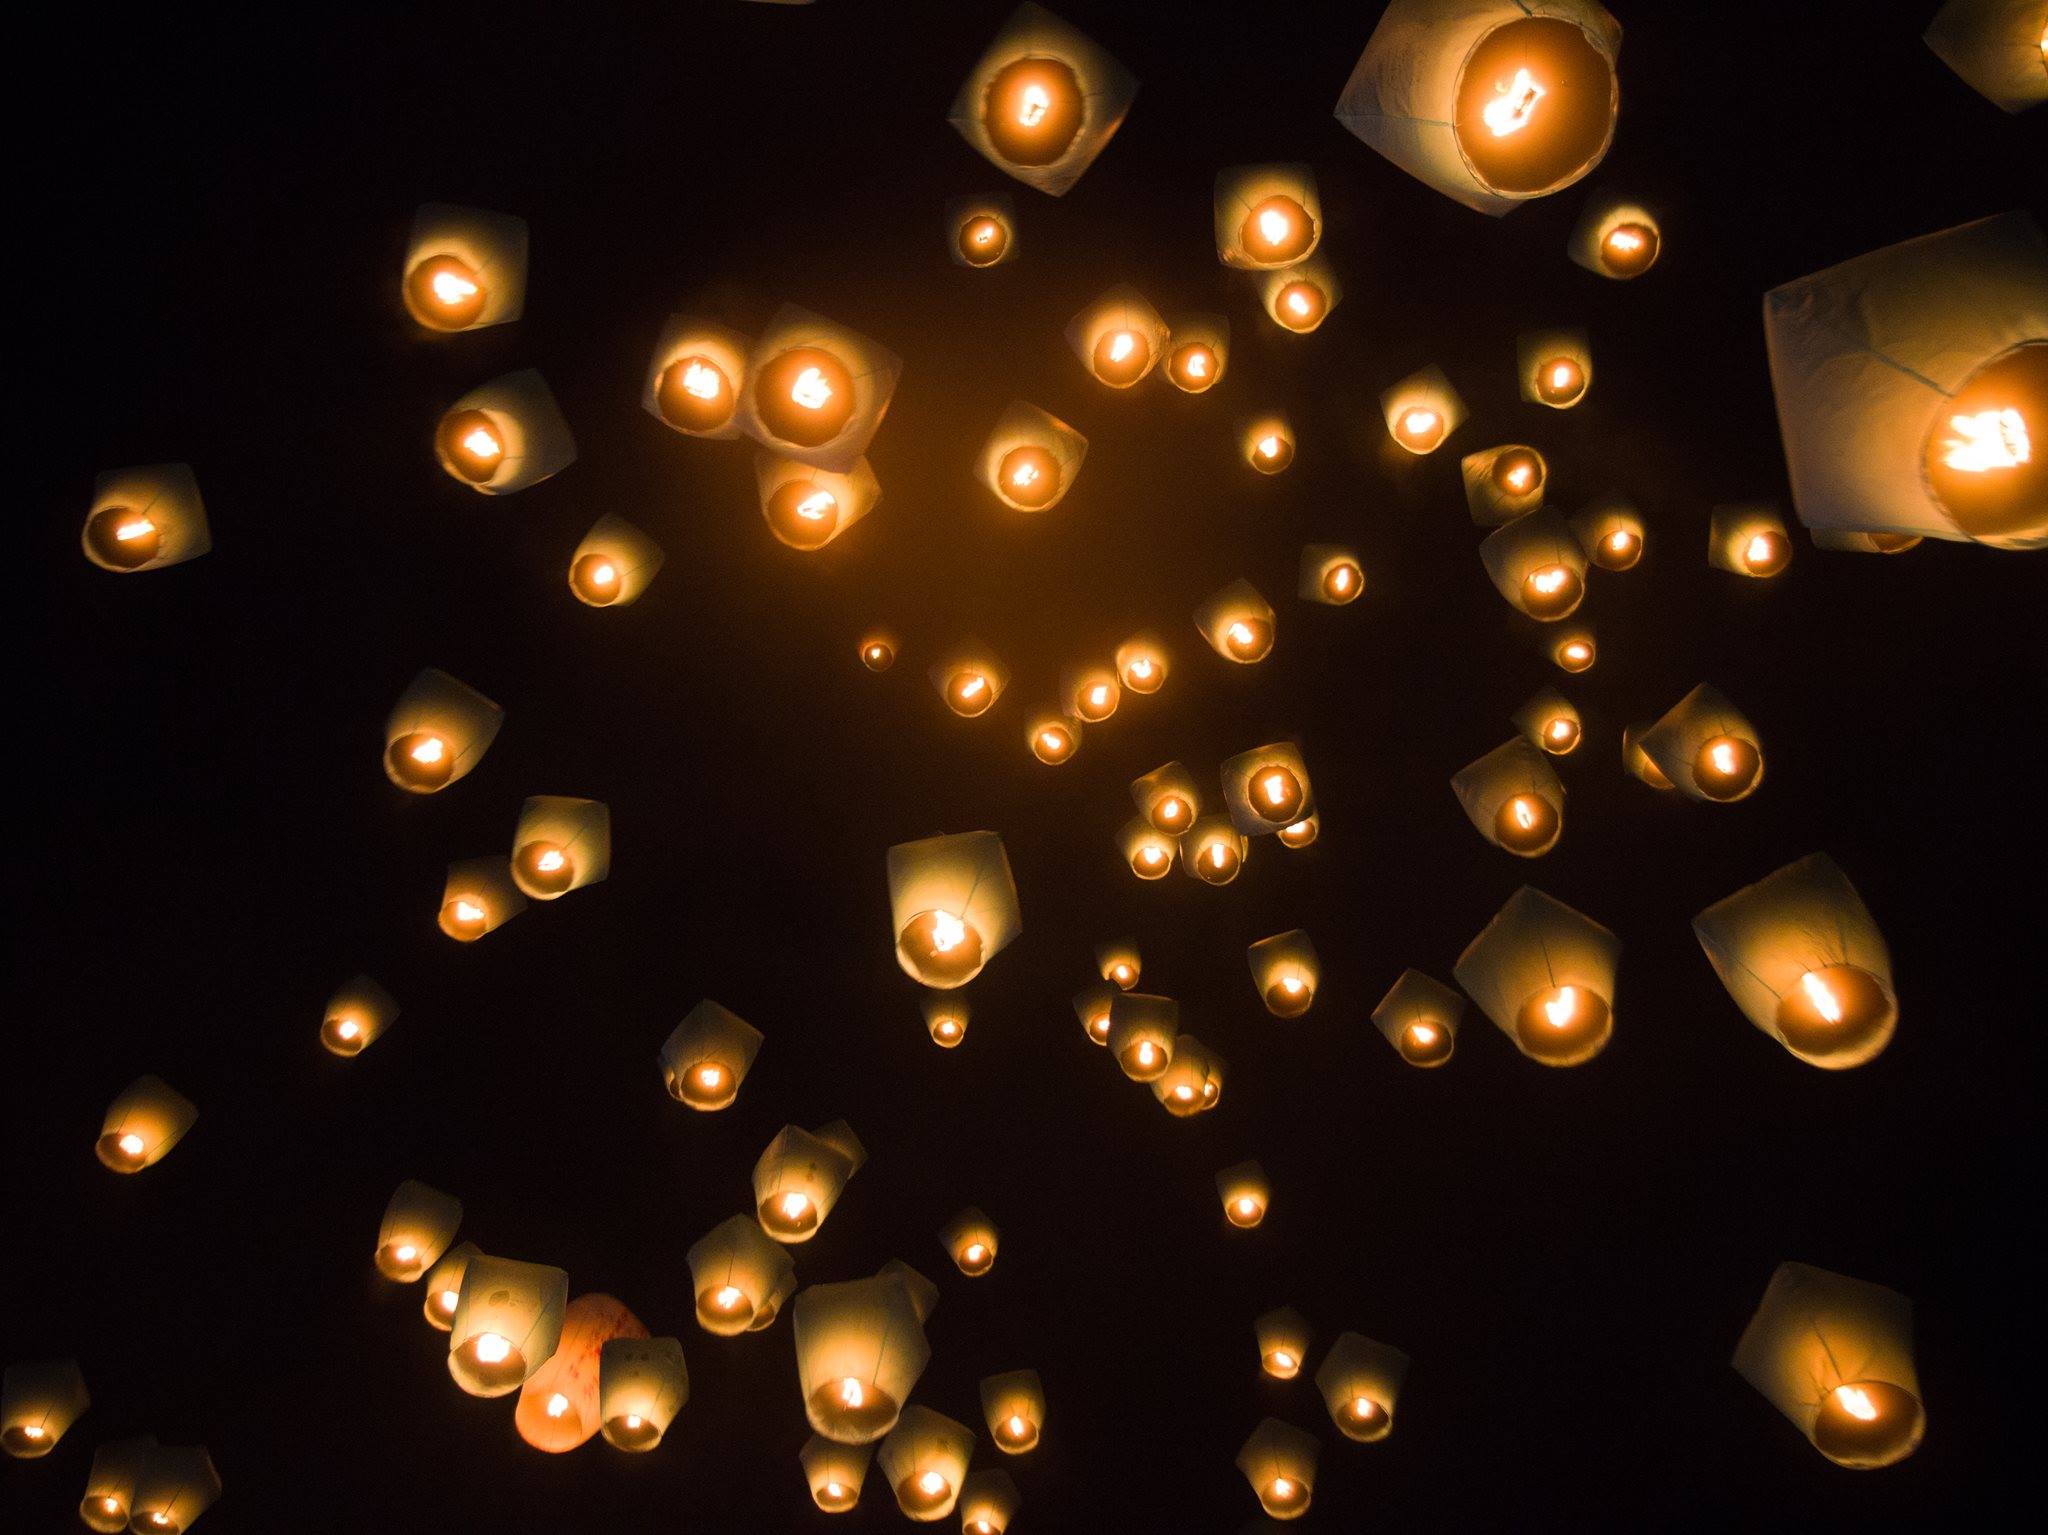 Lighting the night at Taiwan's annual lantern festival in Shifen (十分).